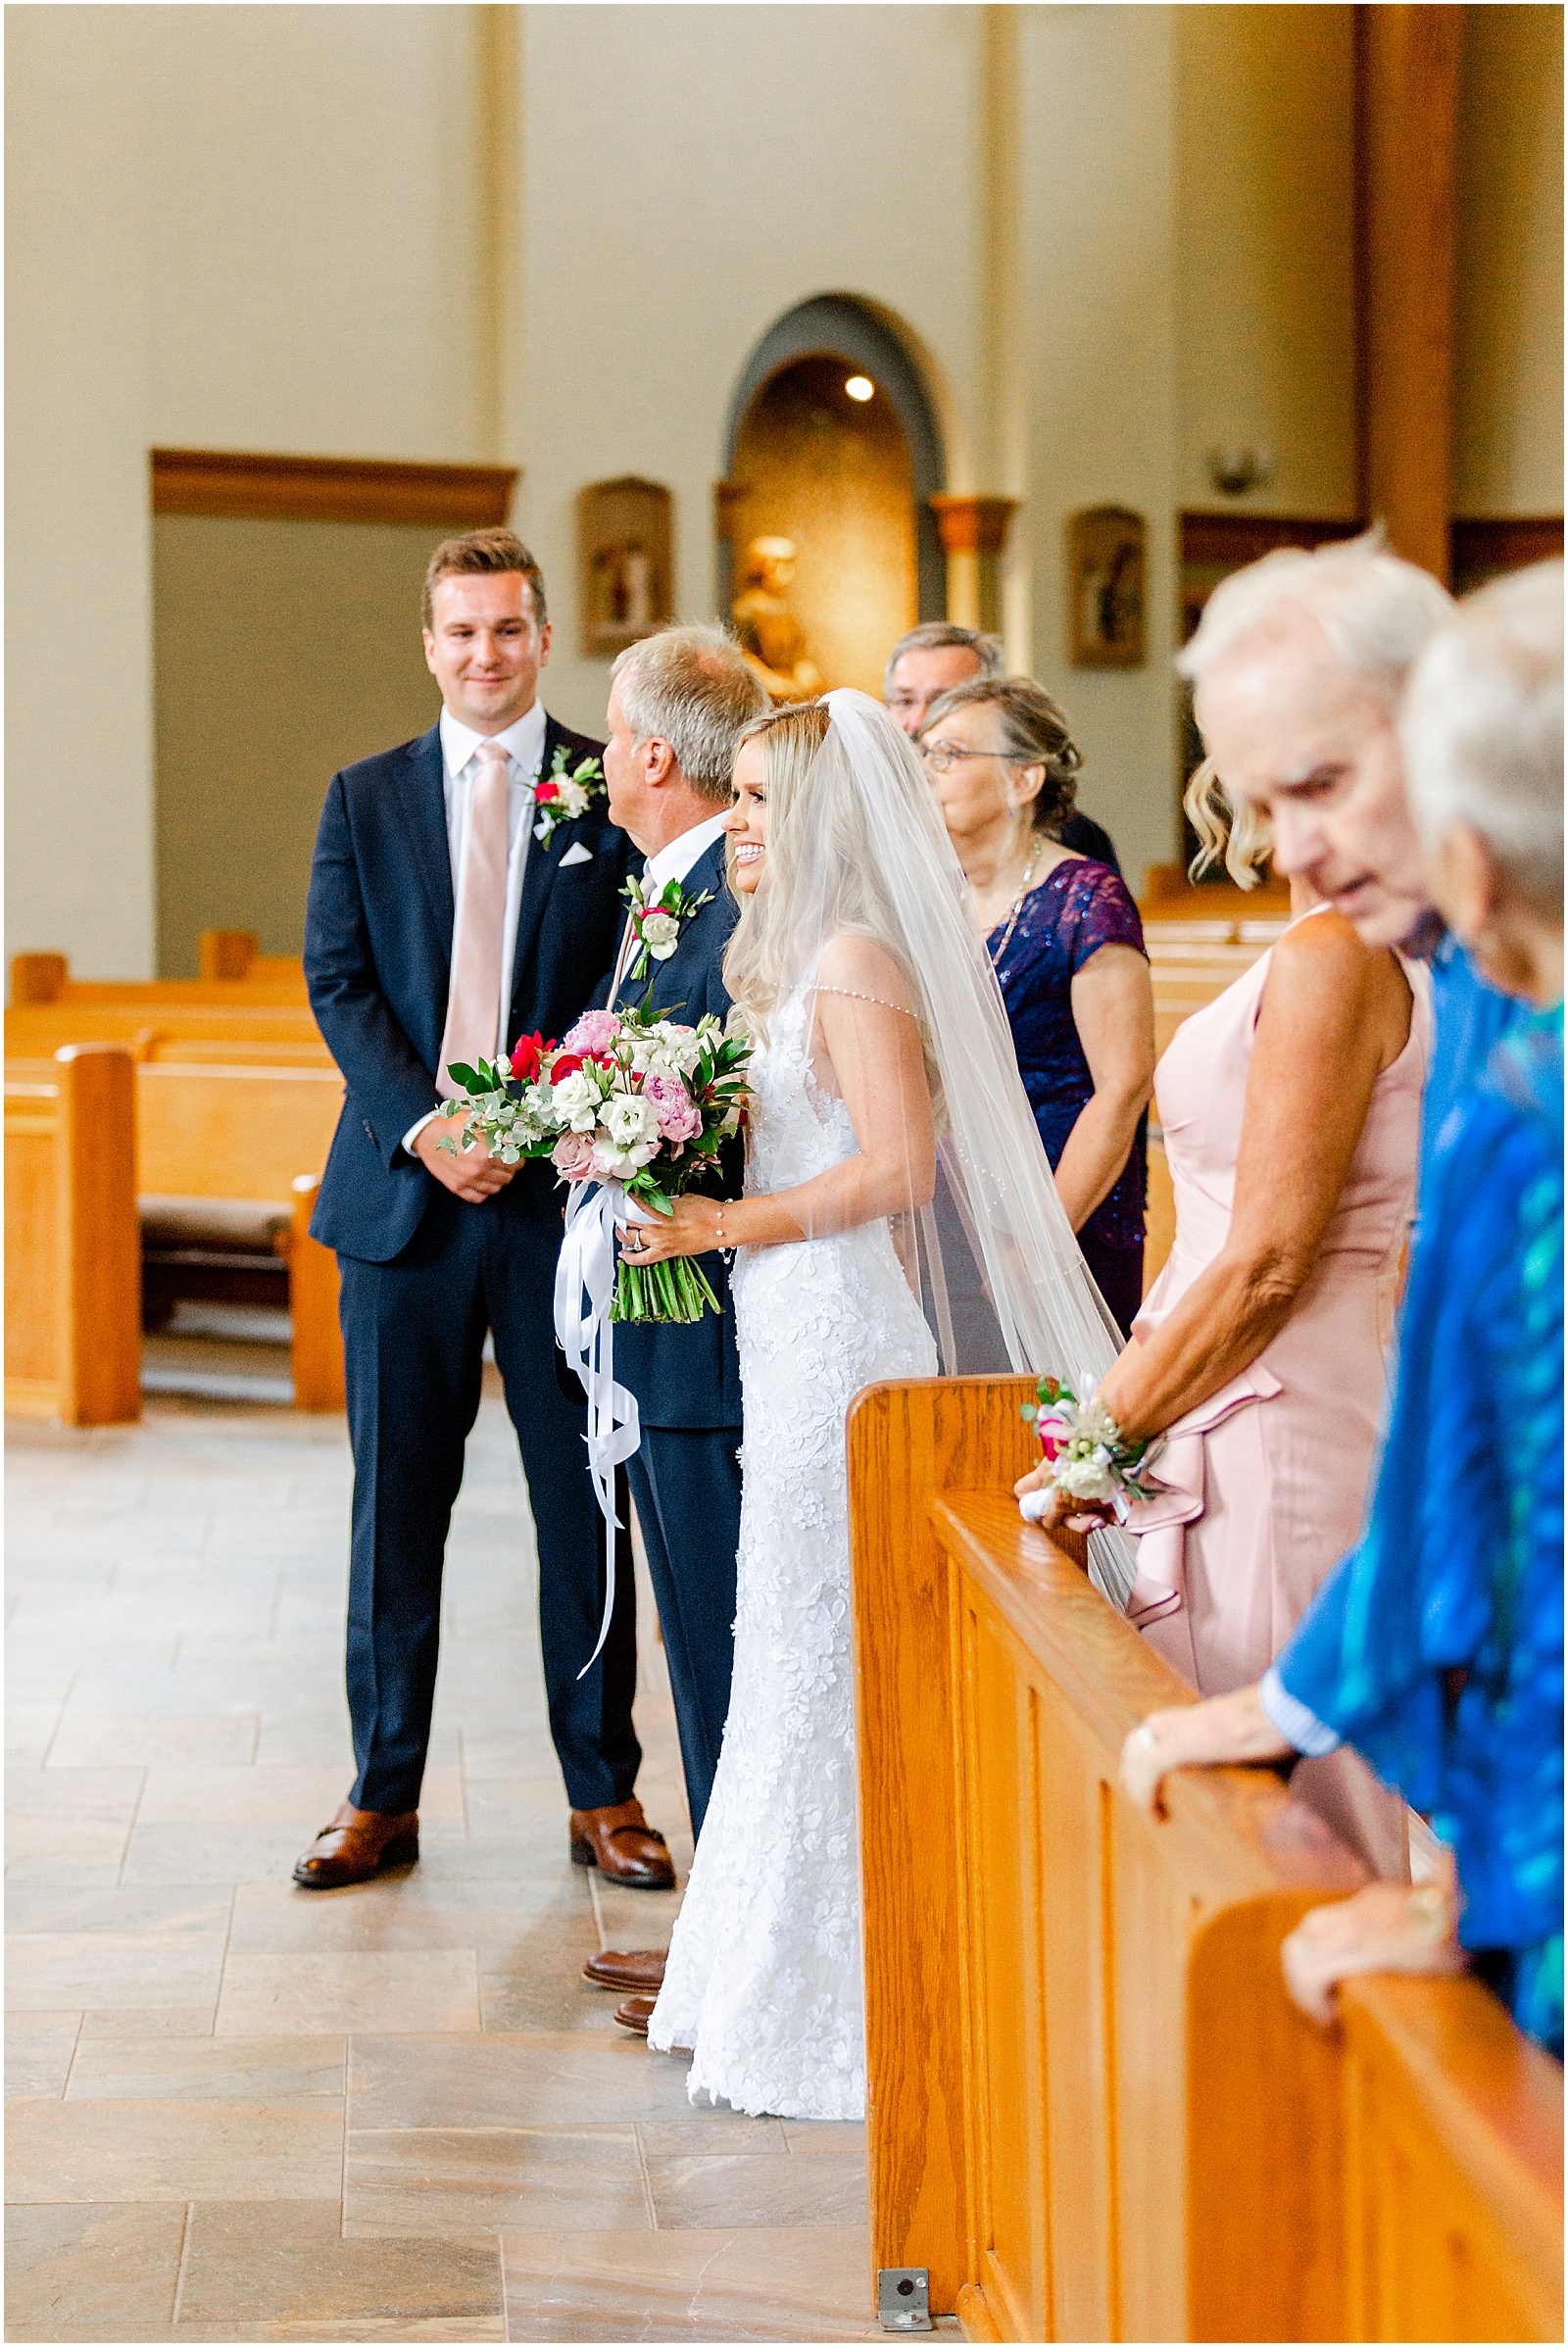 An Evansville Country Club Wedding | Madison and Christiaan | Bret and Brandie | Evansville Photographers | @bretandbrandie-0119.jpg